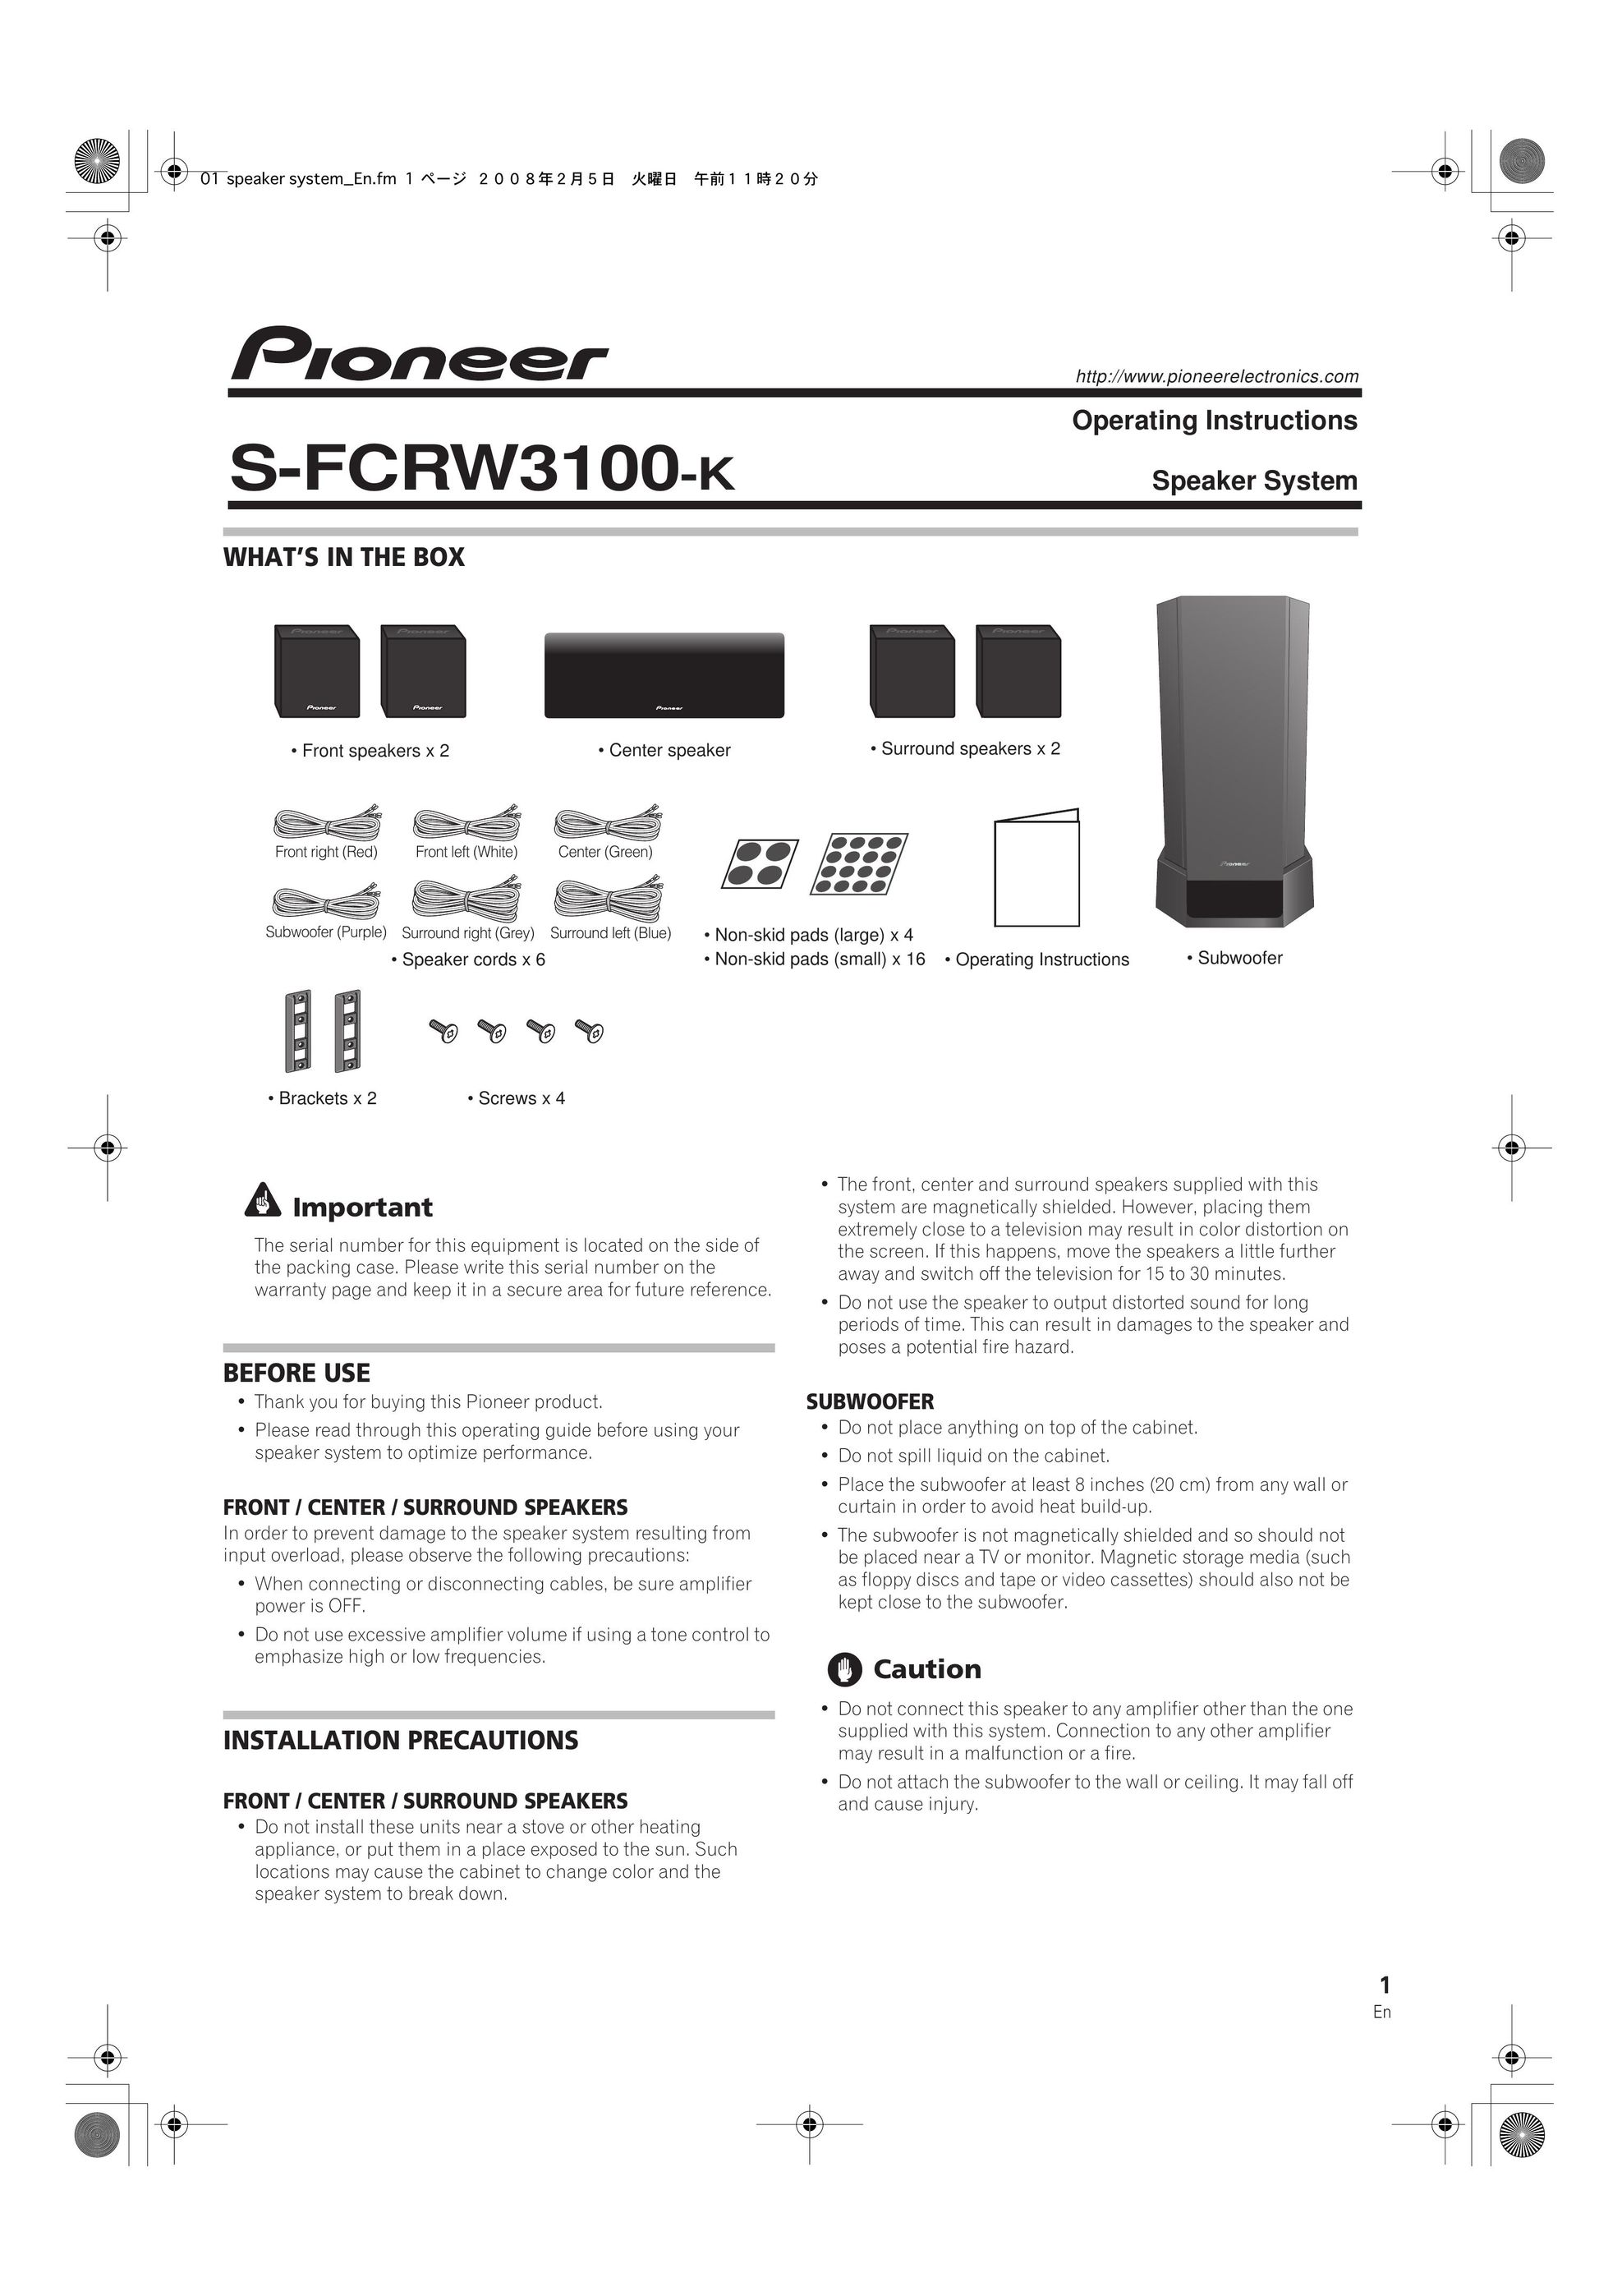 Pioneer S-FCRW3100-k Portable Speaker User Manual